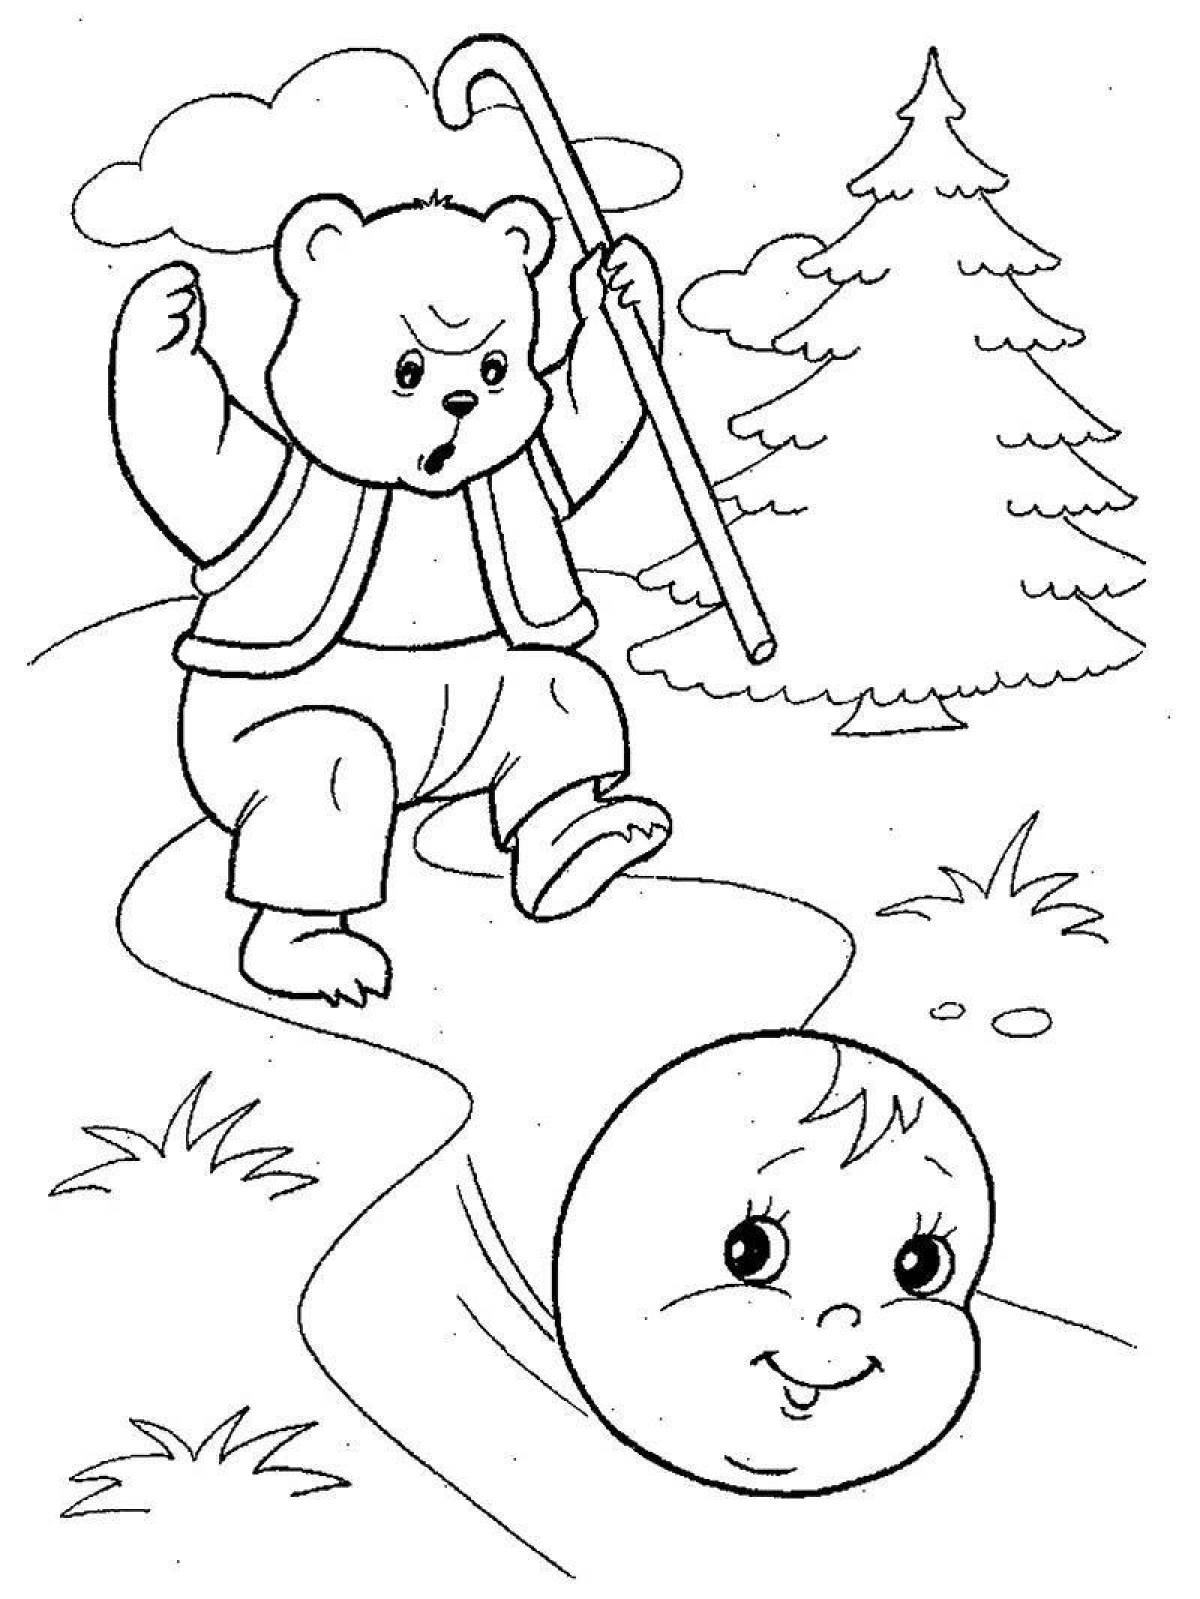 Comic snowy gingerbread man